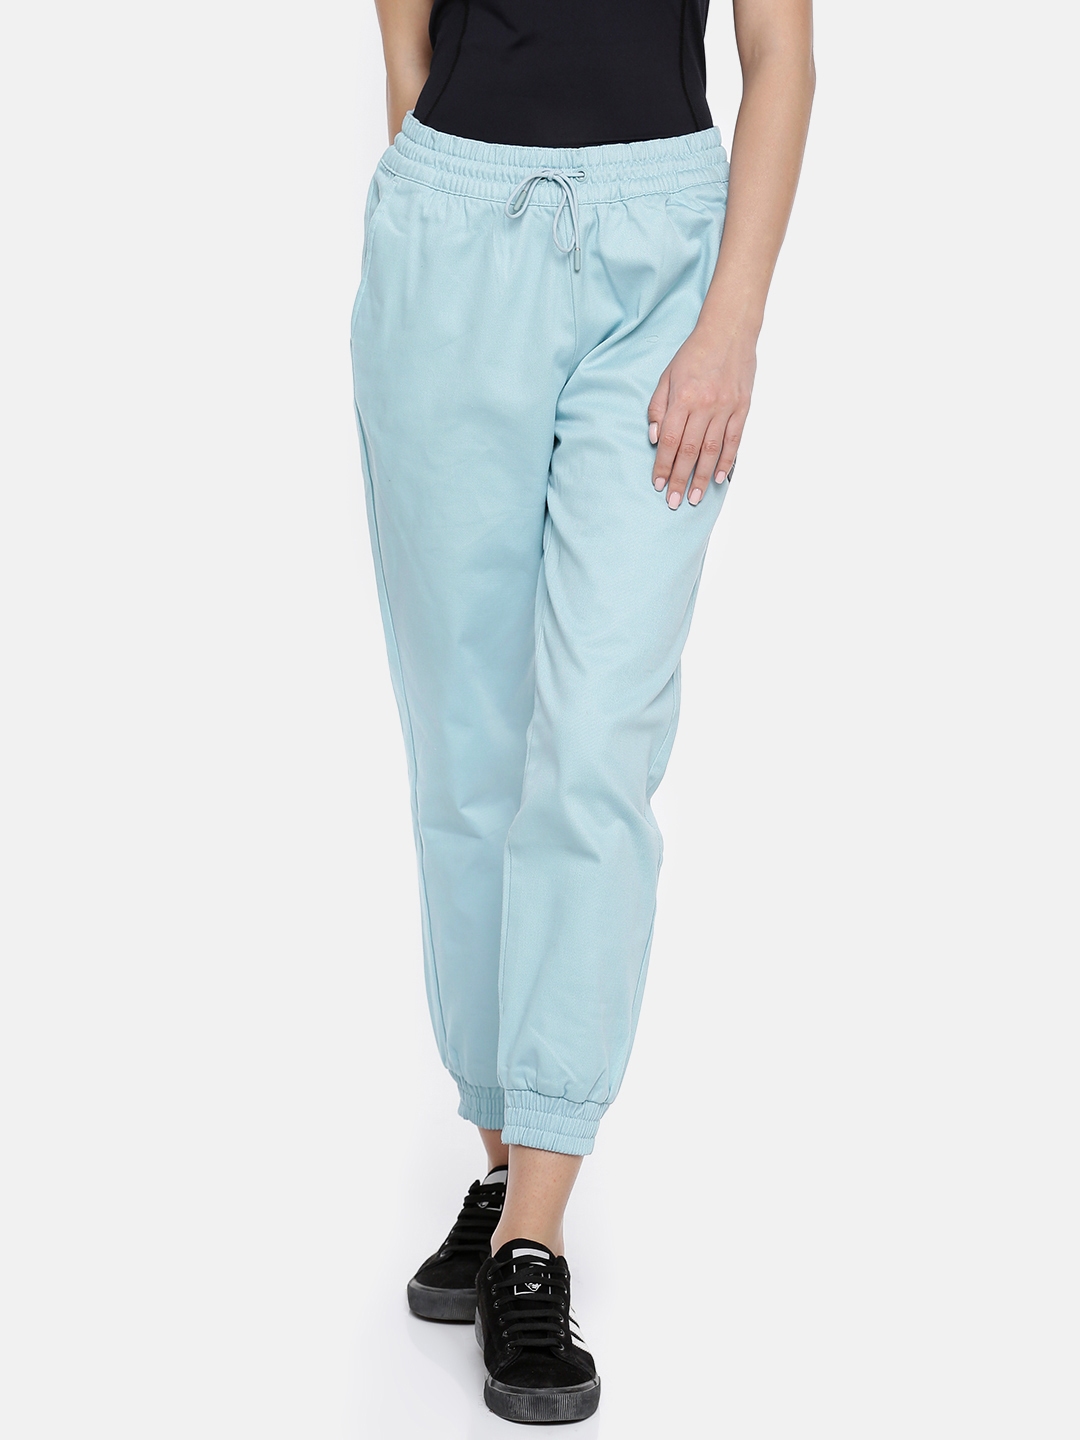 compensar olvidadizo superficial Buy ADIDAS Originals Women Blue Regular Fit Solid Denim Joggers - Trousers  for Women 2419685 | Myntra